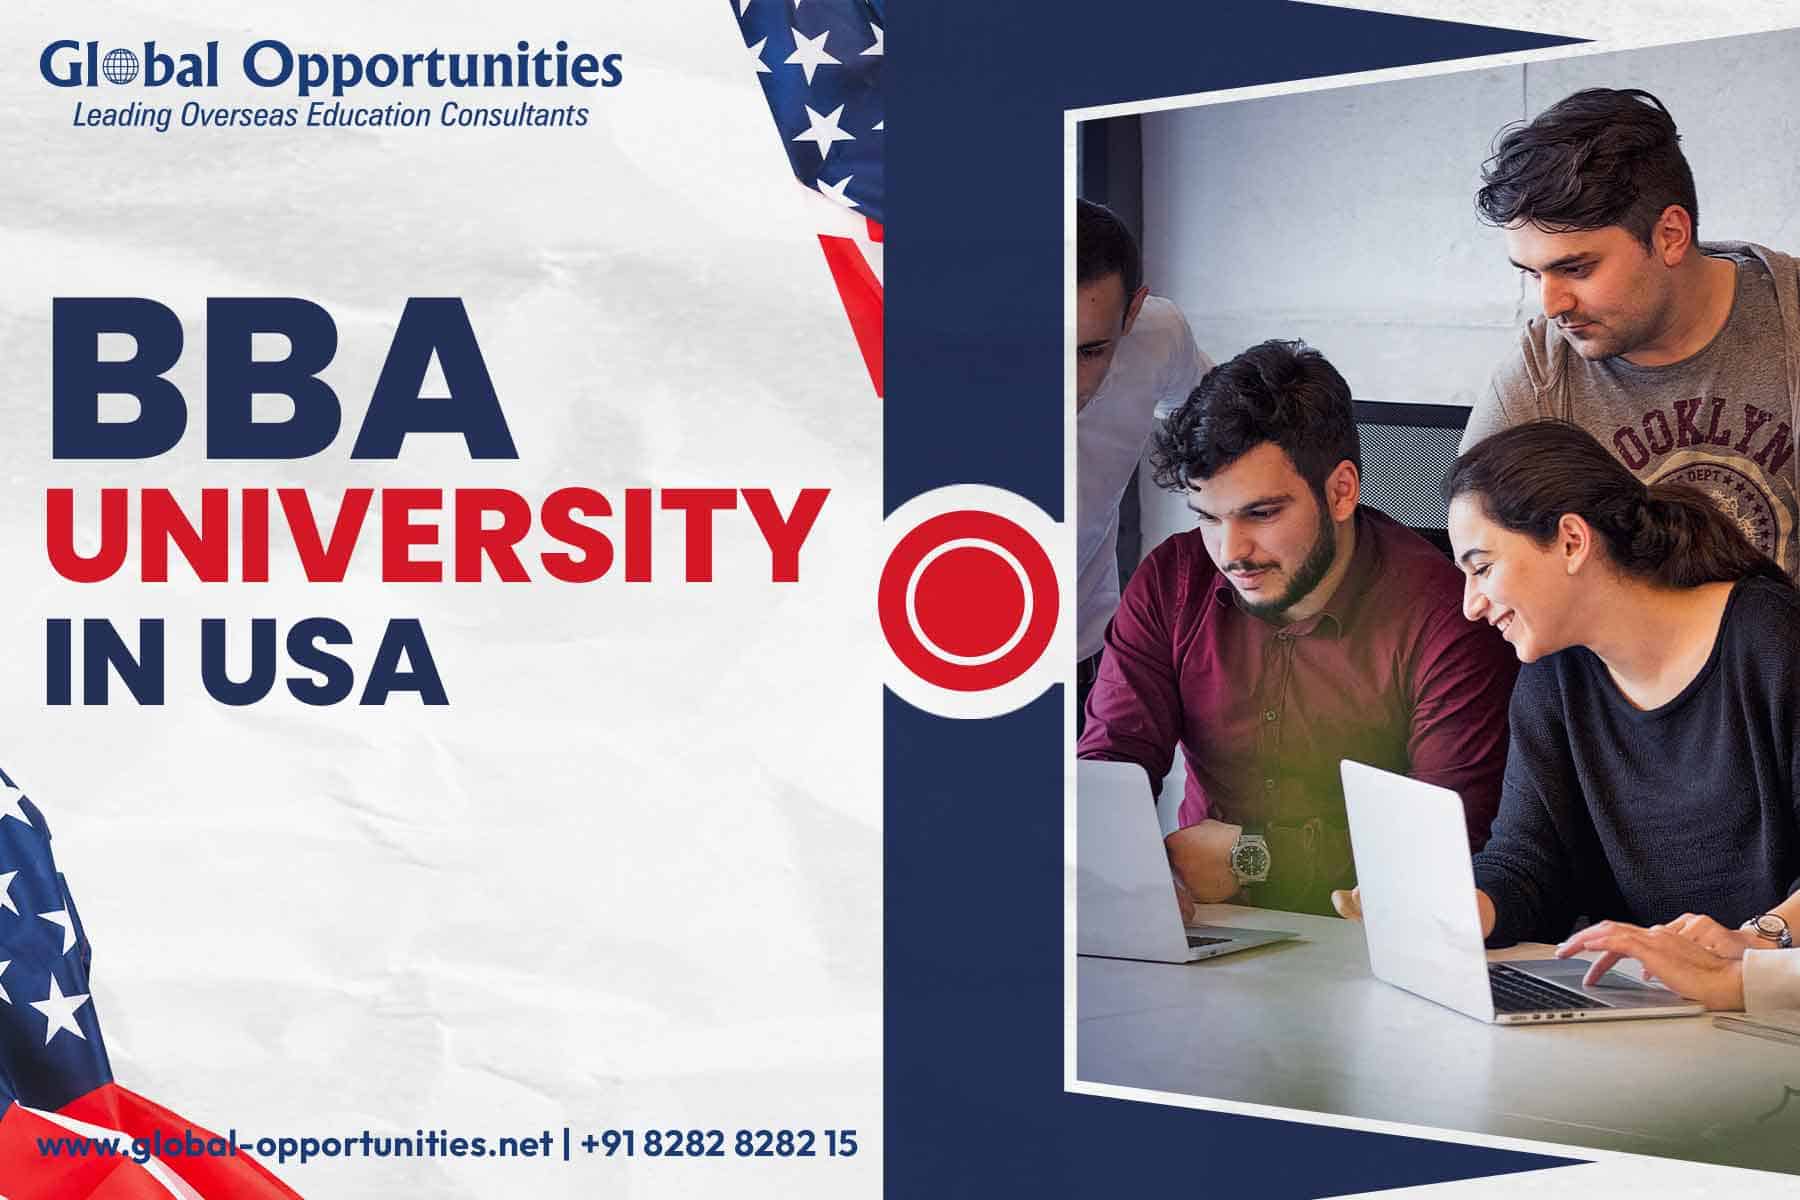 BBA University in USA